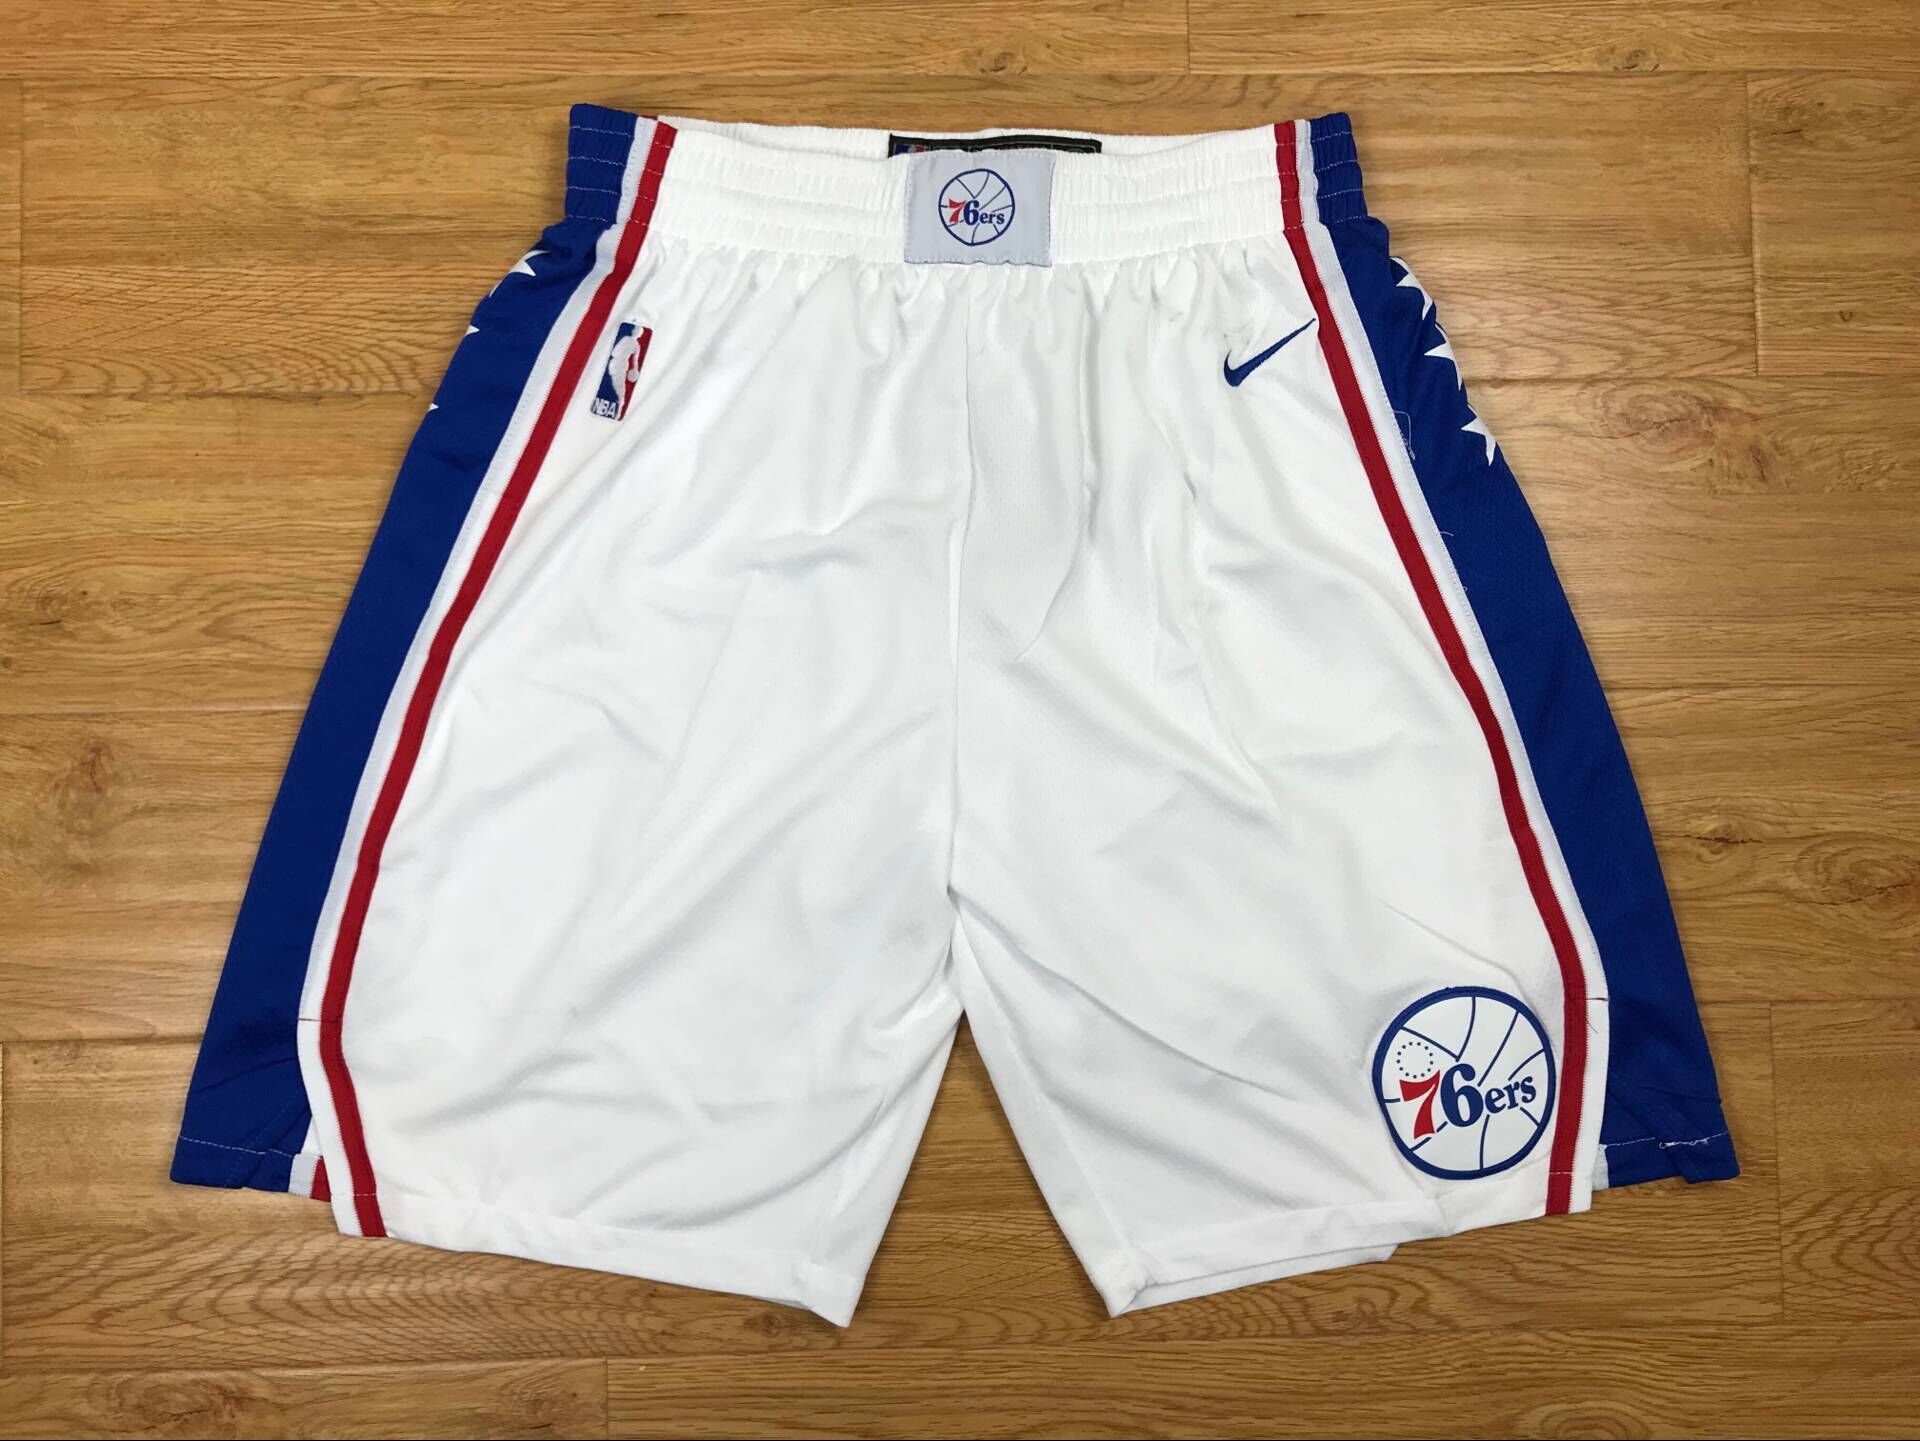 76ers White Nike Authentic Shorts